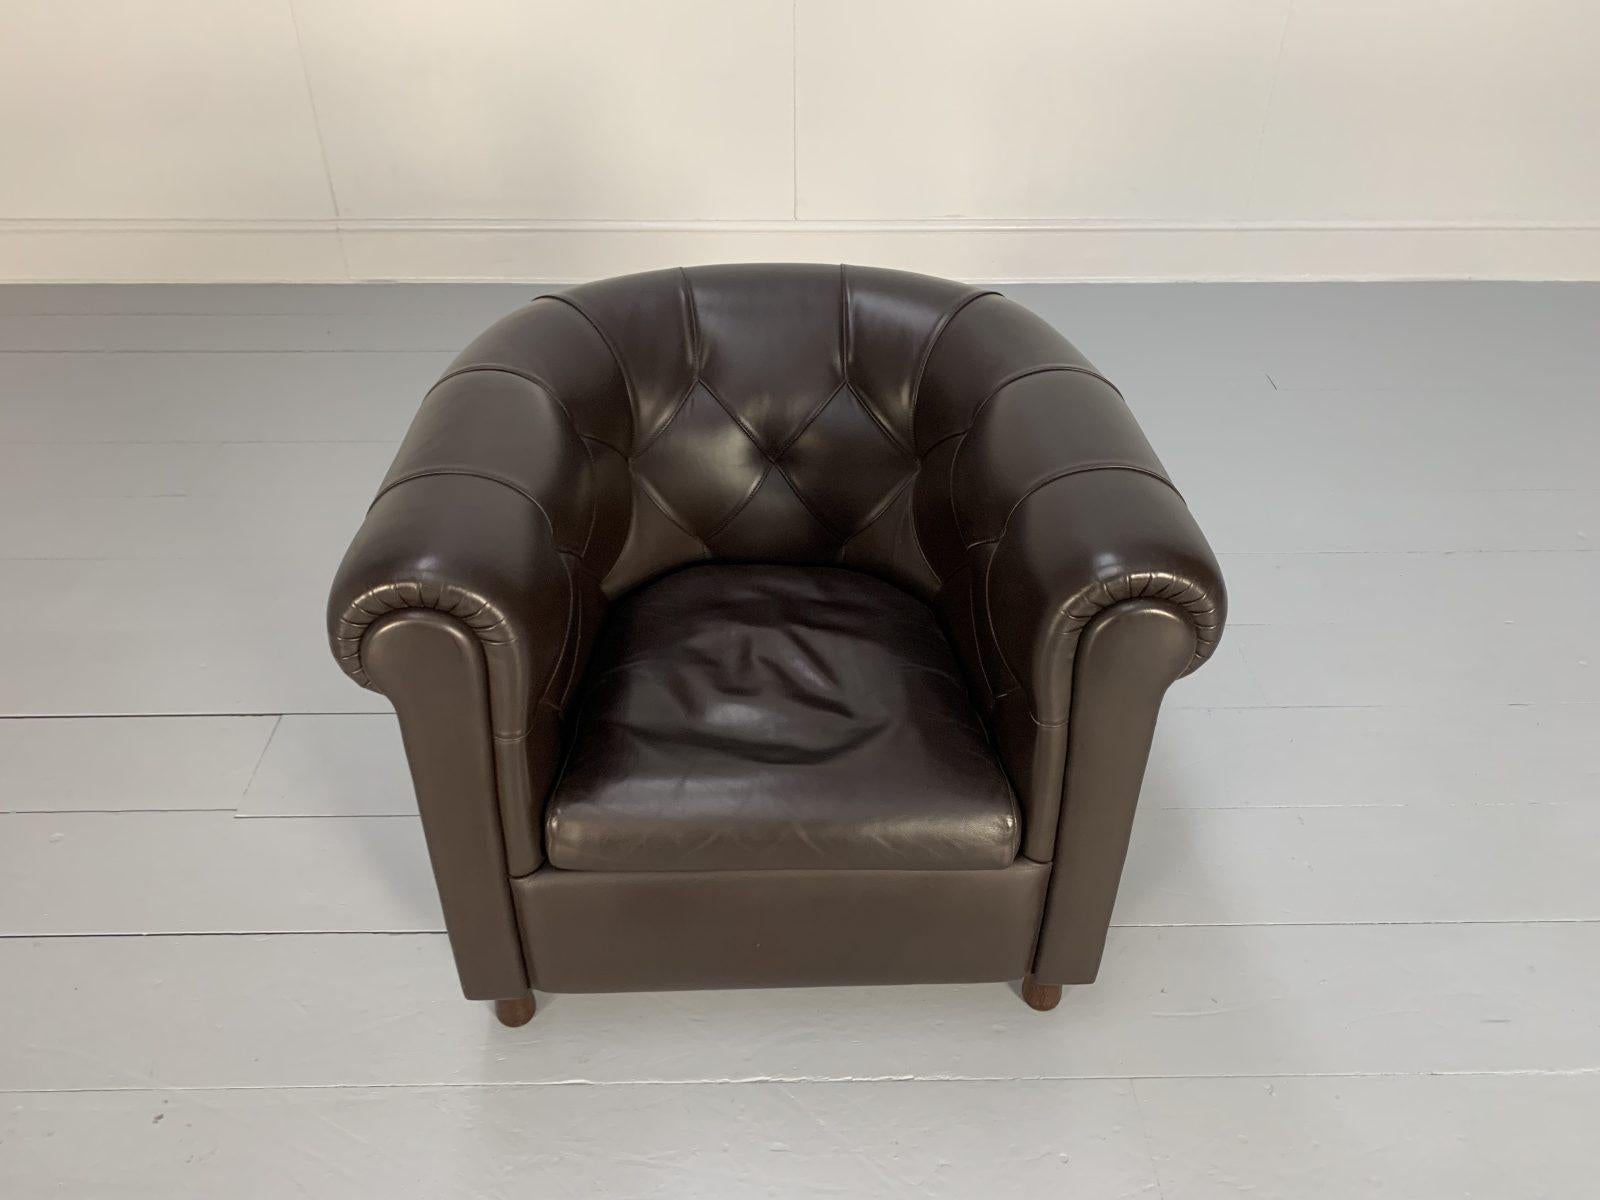 2 Poltrona Frau “Arcadia” Armchairs, in “Pelle Frau” Dark Brown Leather For Sale 6